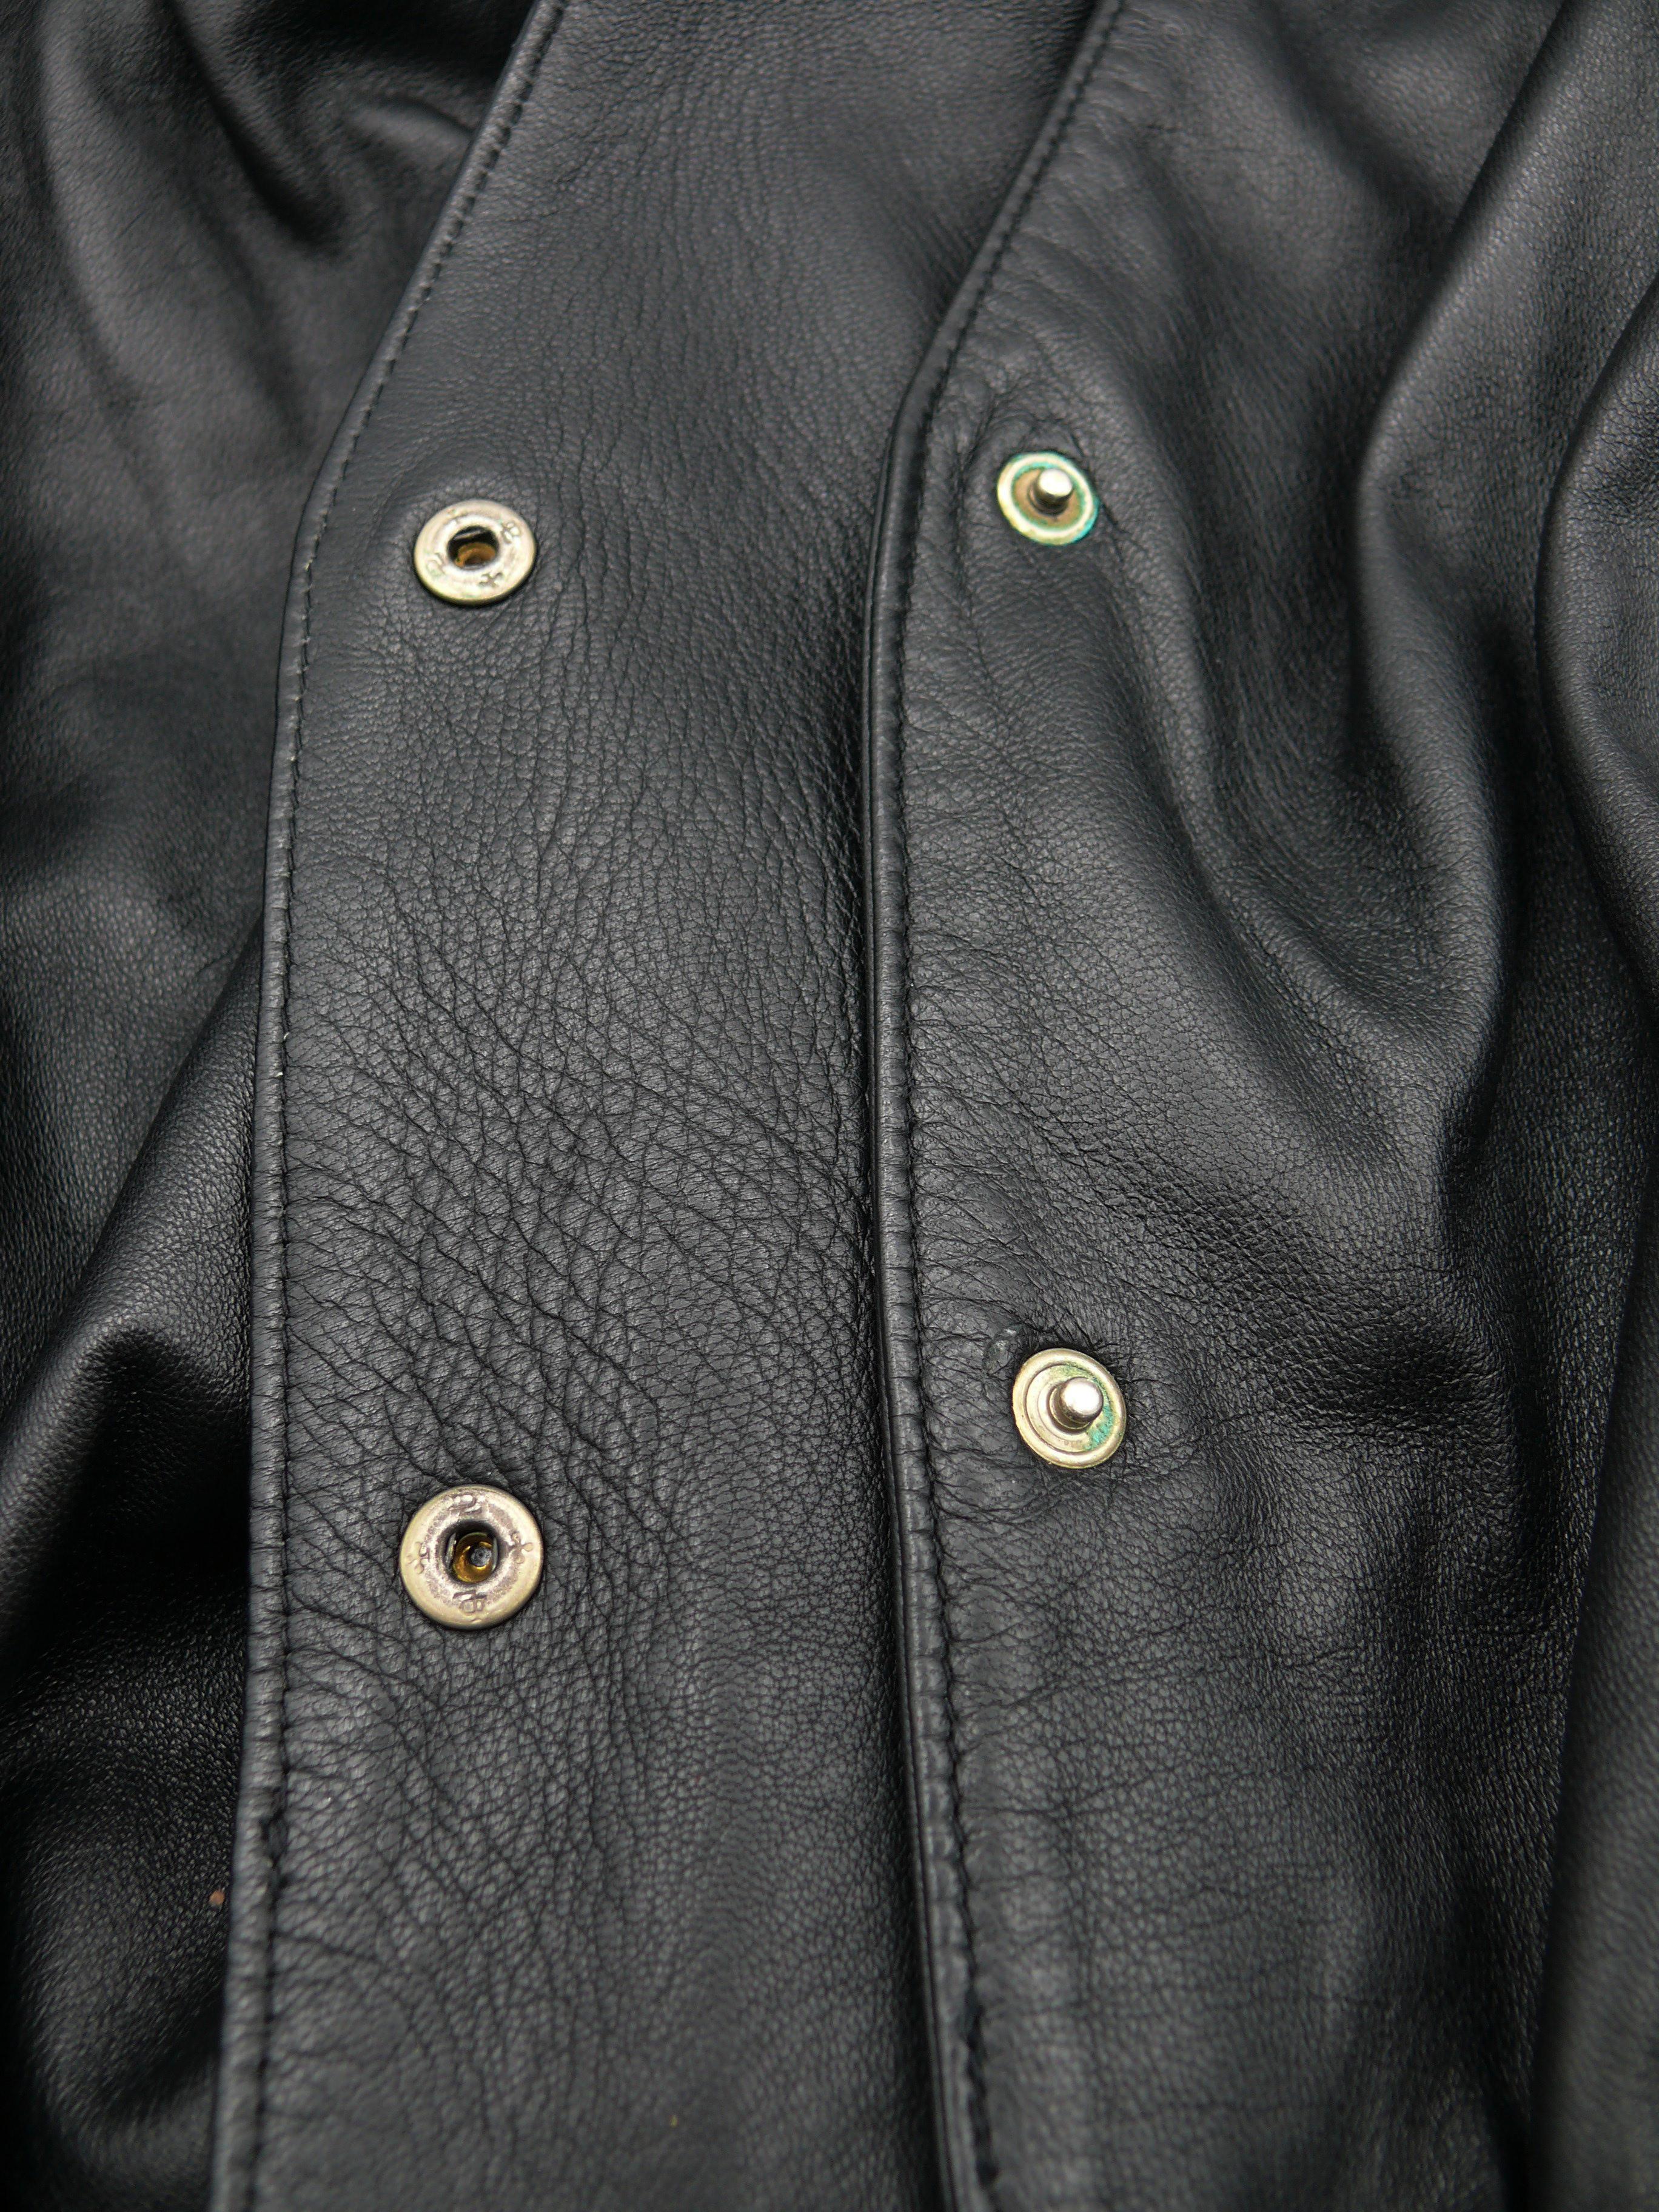 THIERRY MUGLER Vintage Black Leather Dress For Sale 3